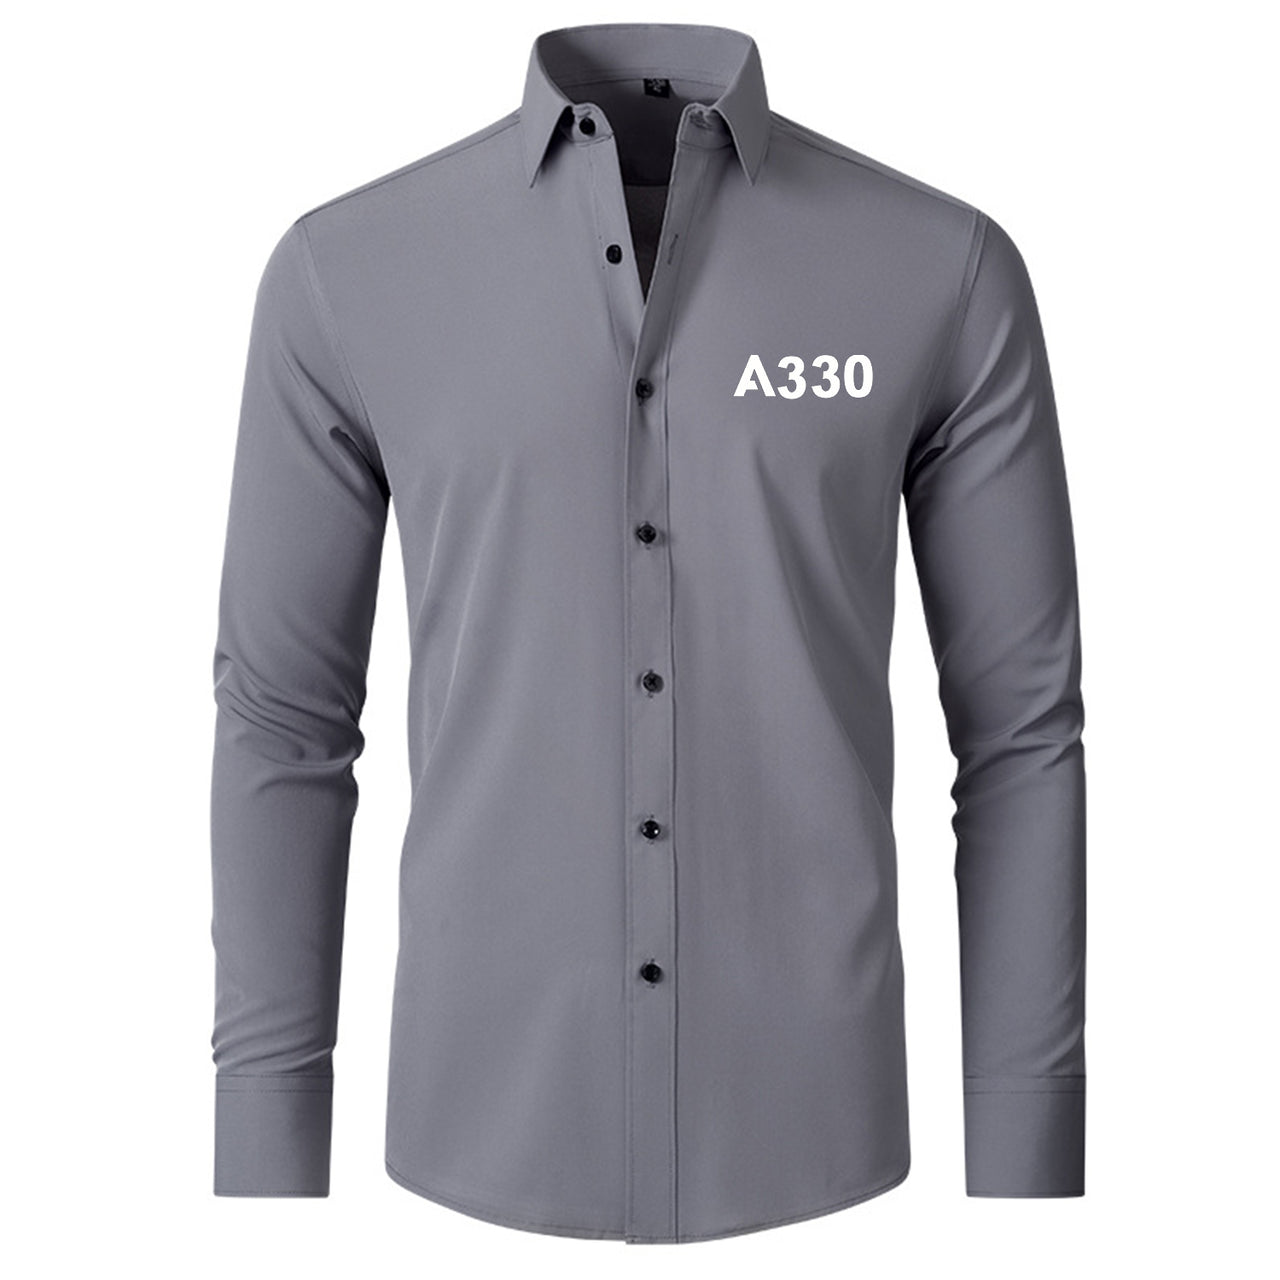 A330 Flat Text Designed Long Sleeve Shirts